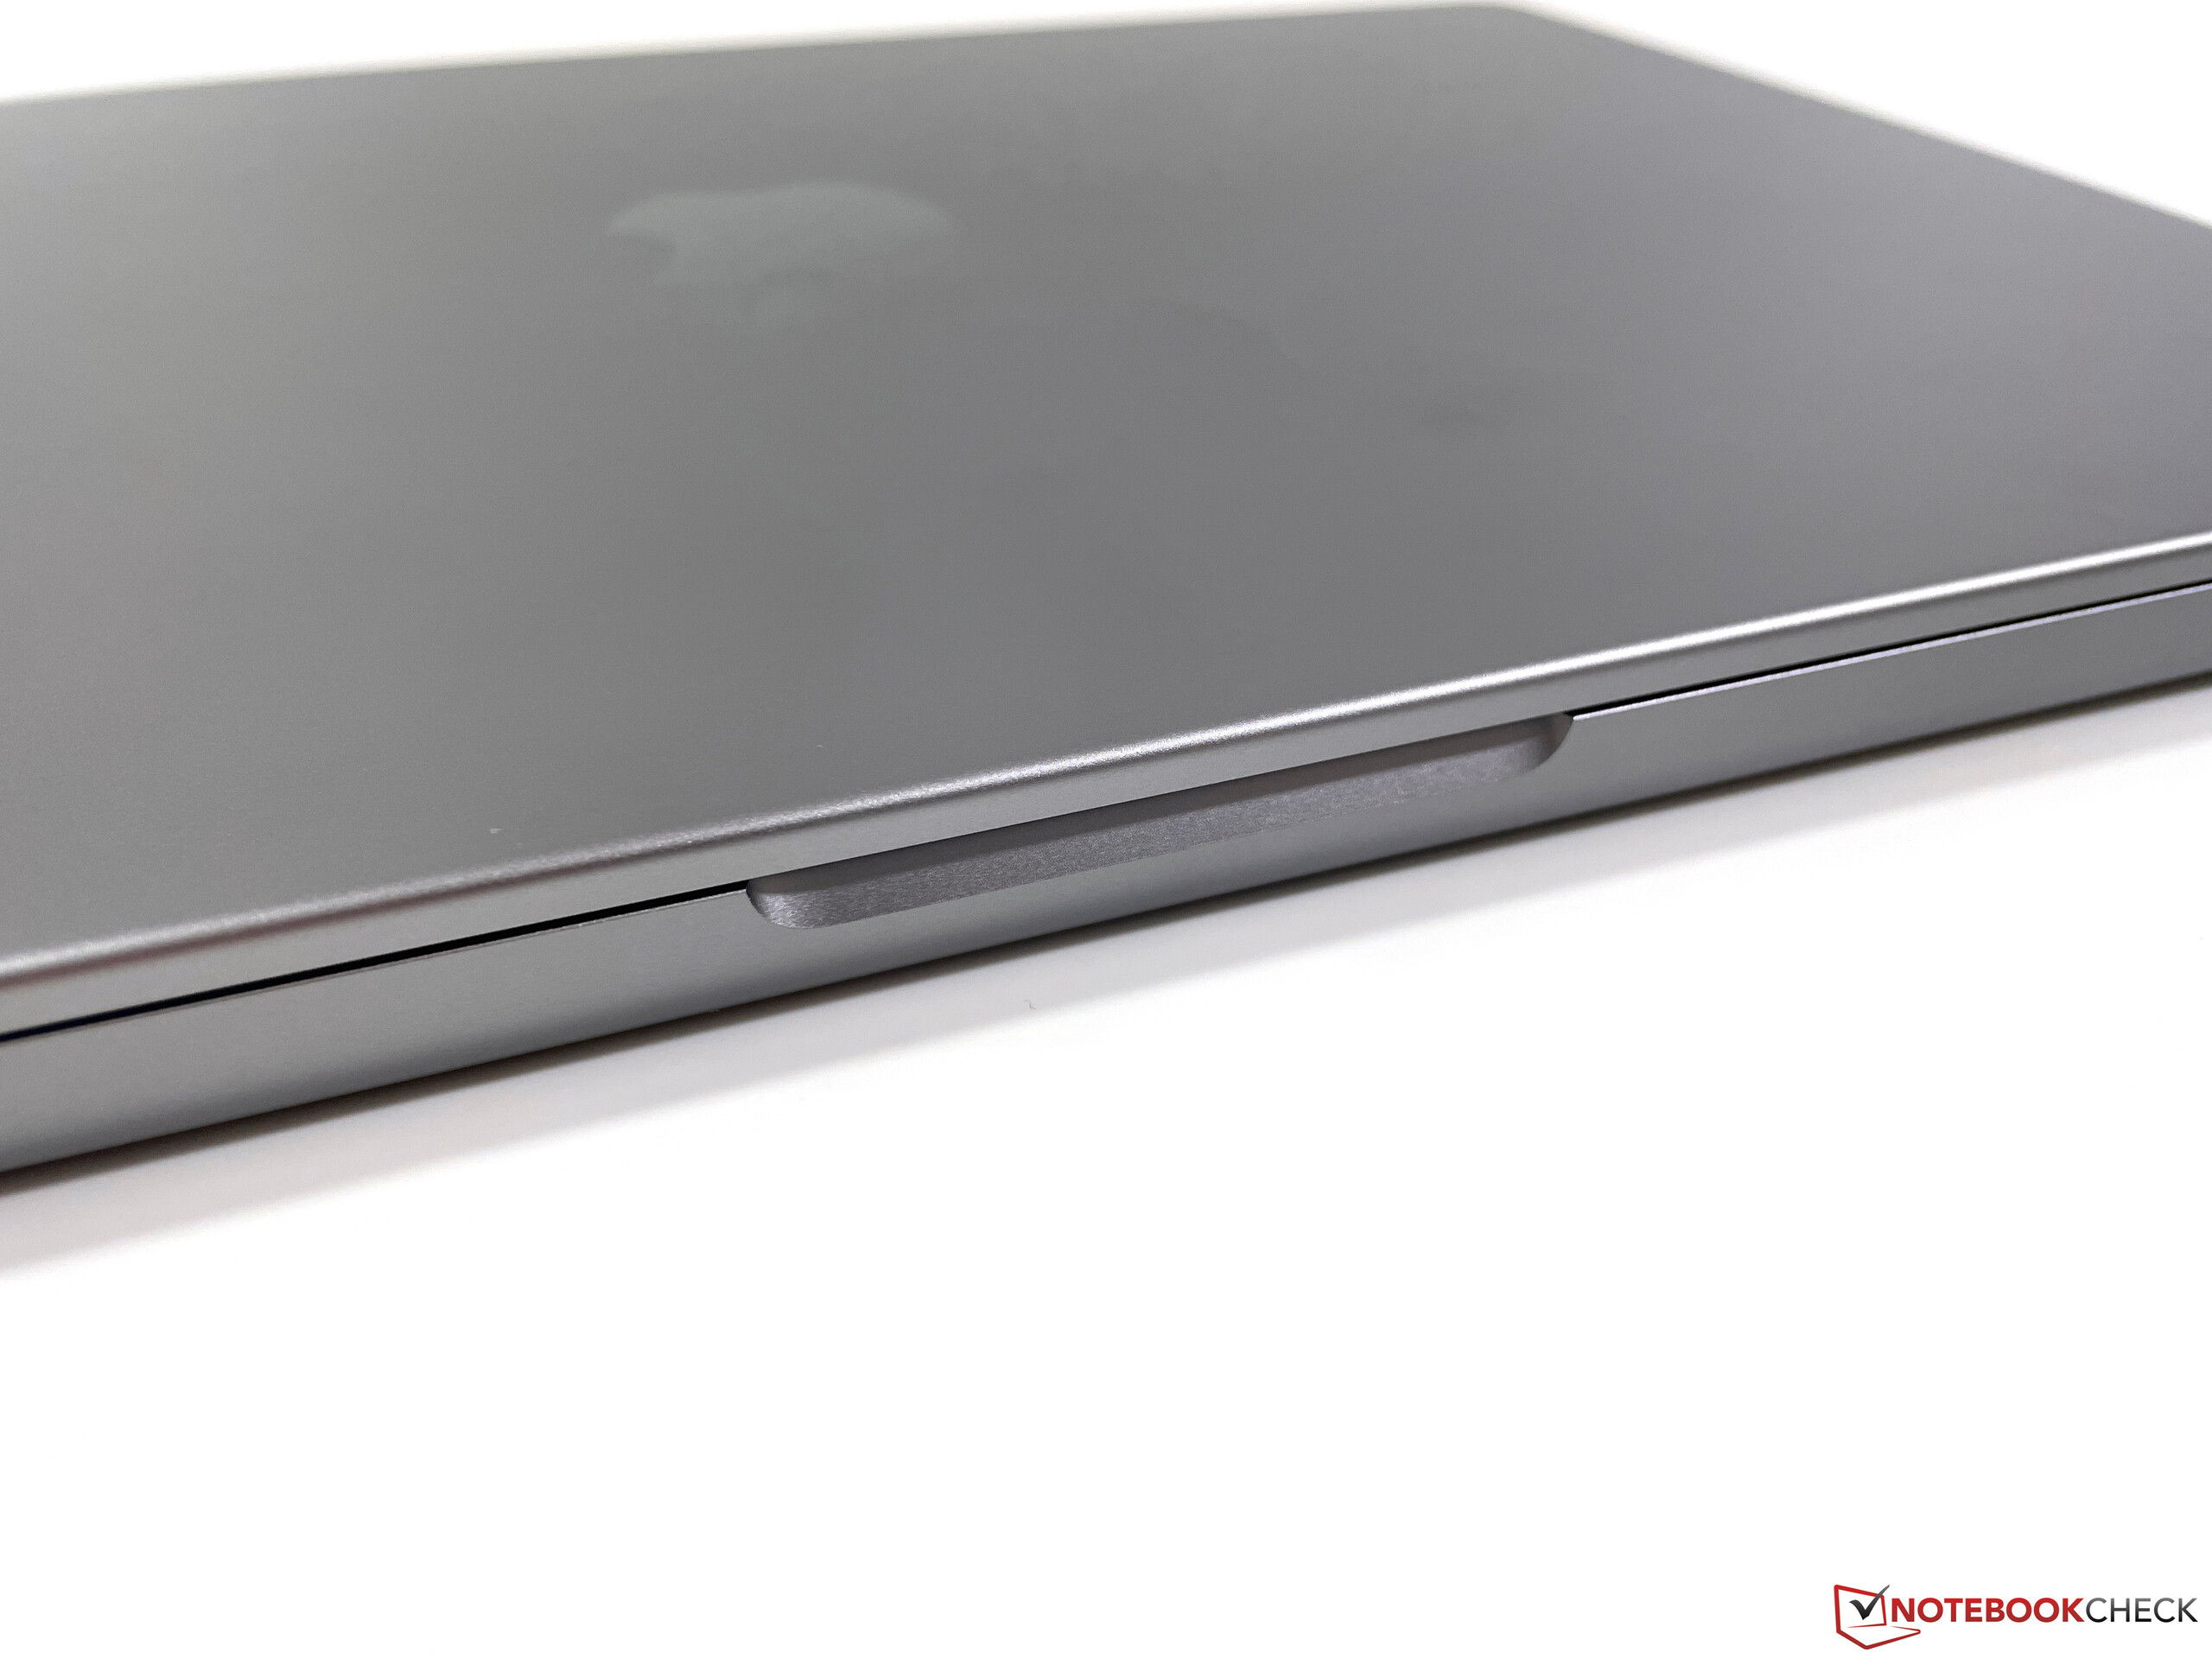 MacBook Pro 14-Inch Review: Striking Innovation, Unwieldy Power